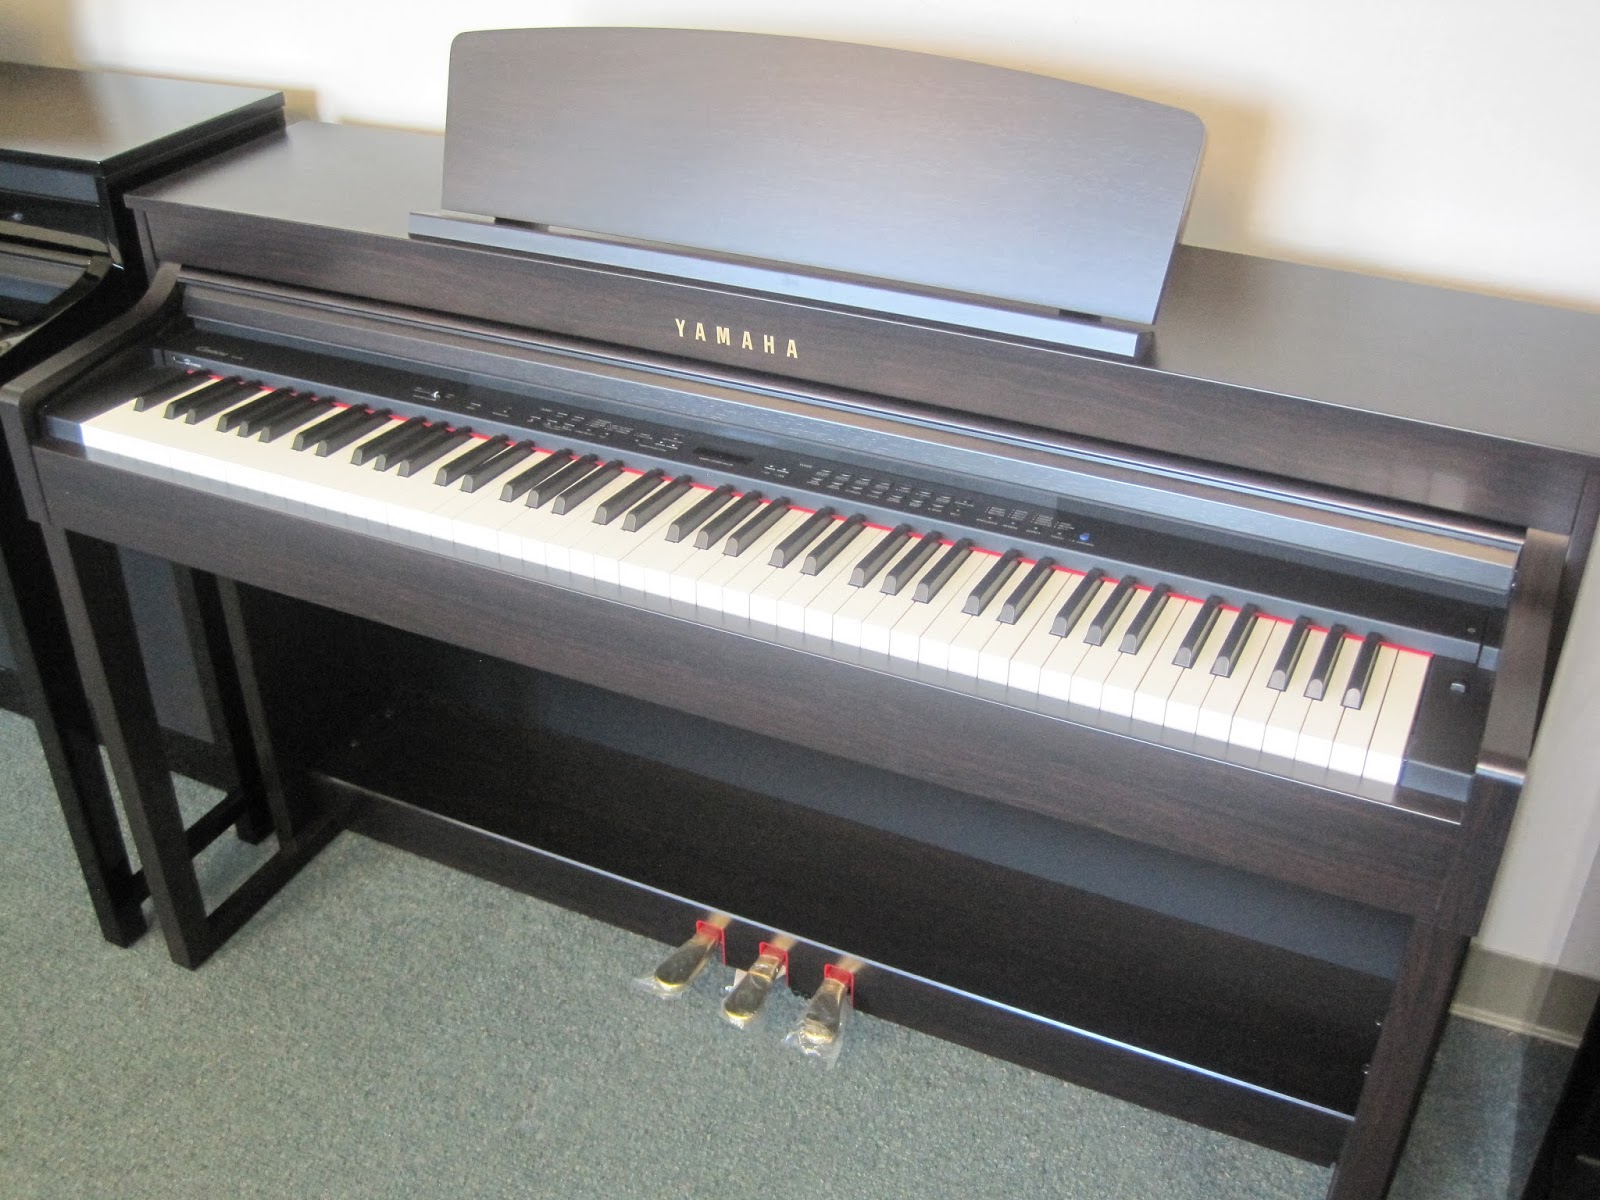 REVIEW - Yamaha CLP430, CLP440, CLP470, CLP480 Digital Pianos